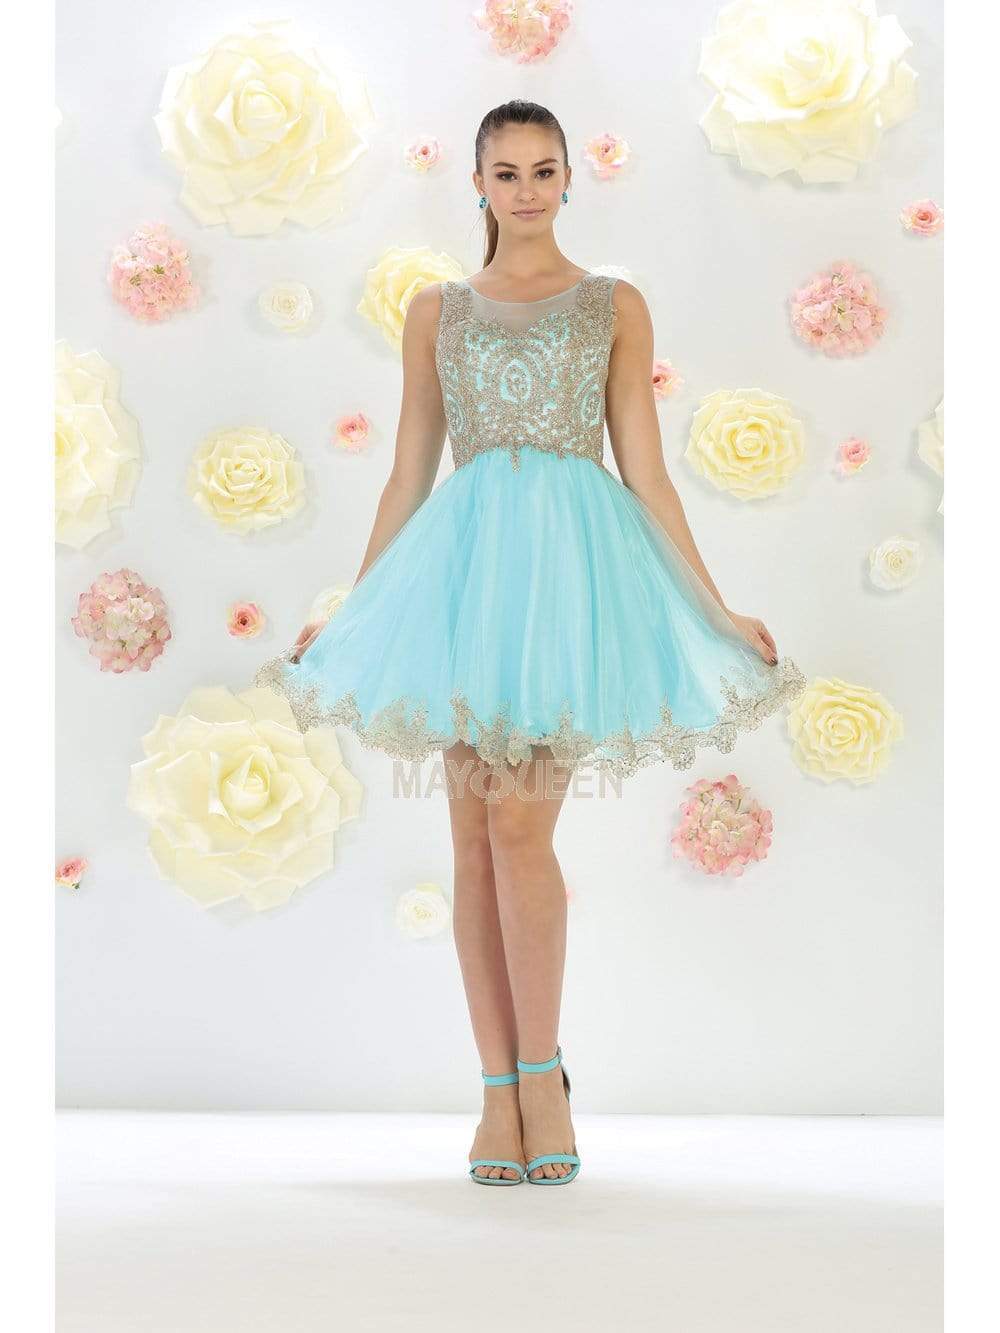 May Queen - MQ1434 Illusion Neckline Lace Applique Cocktail Dress Homecoming Dresses 2 / Aqua